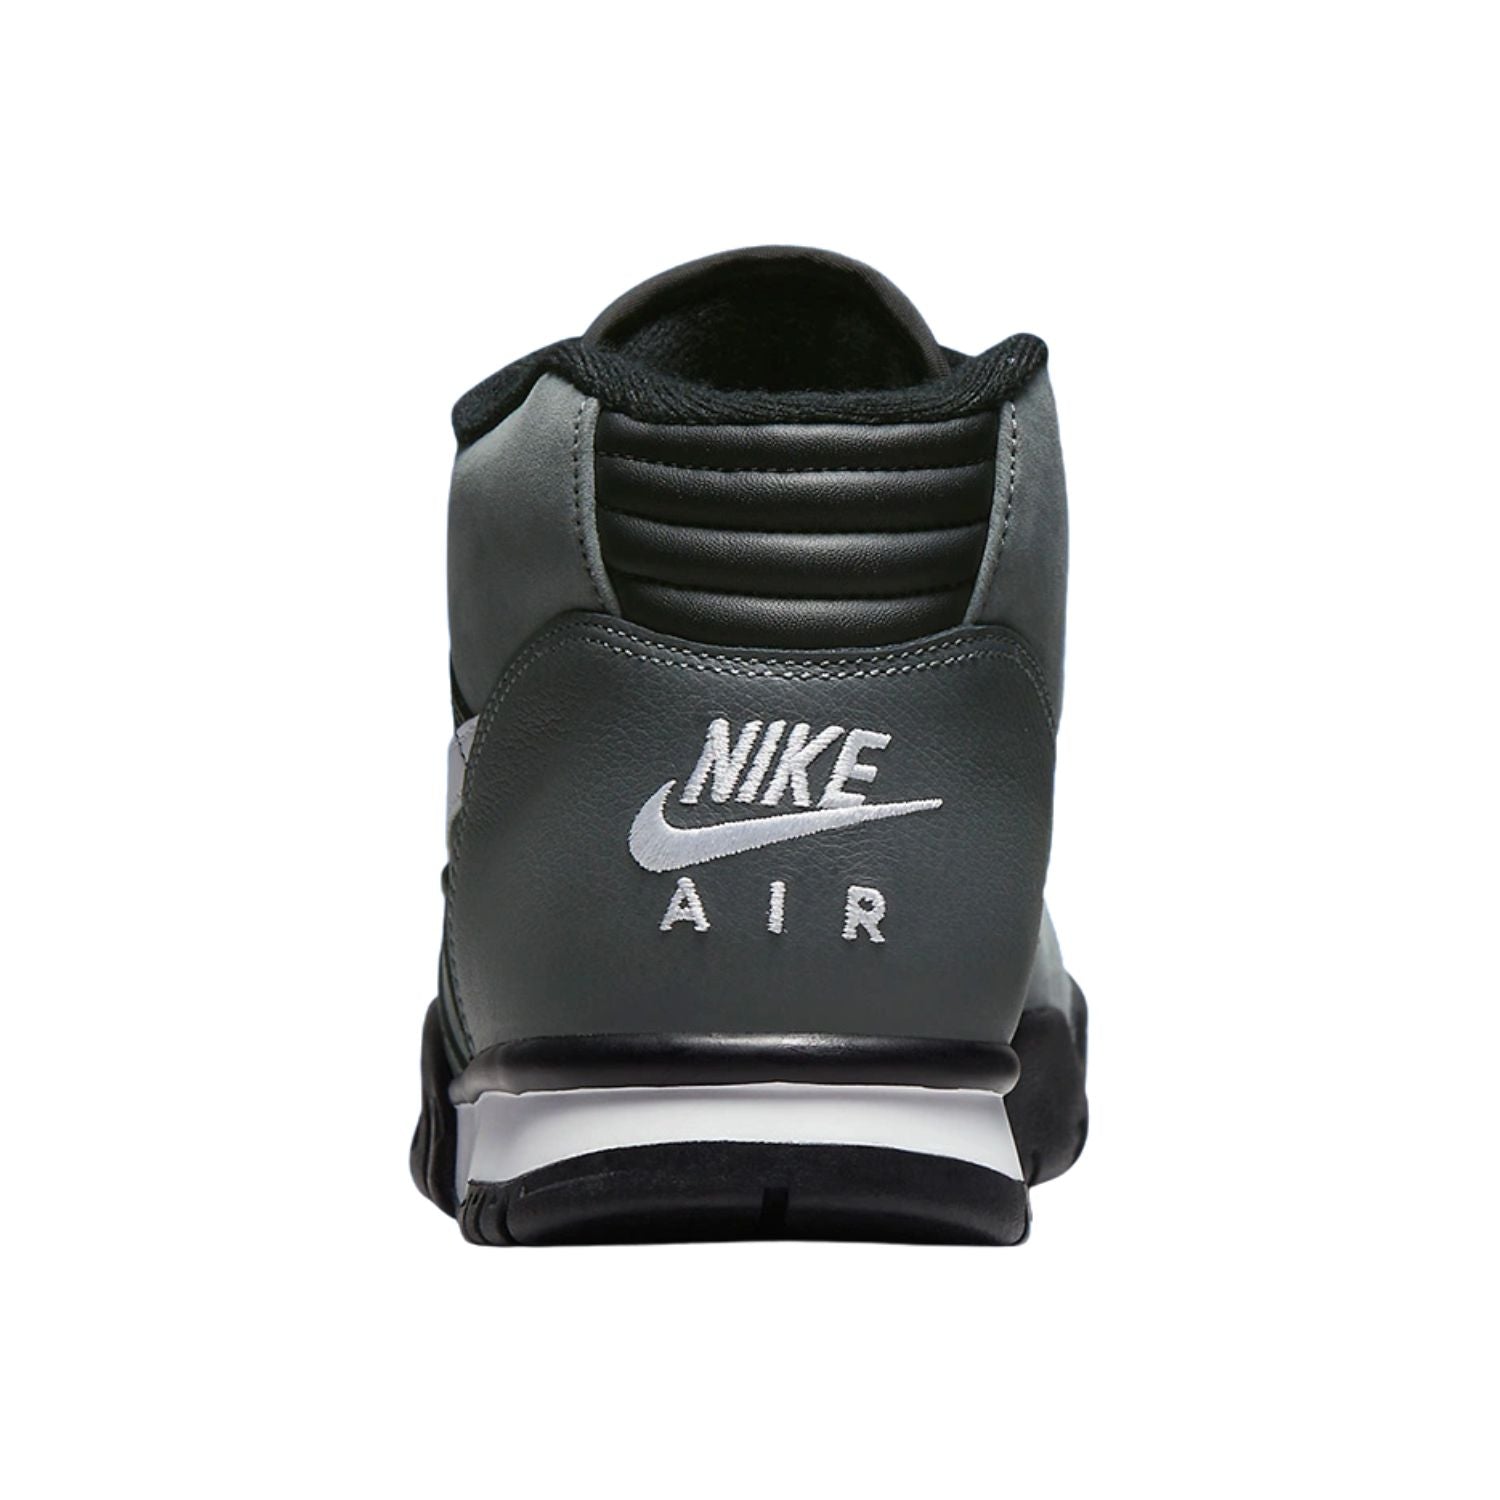 Nike Air Trainer 1 Black Grey